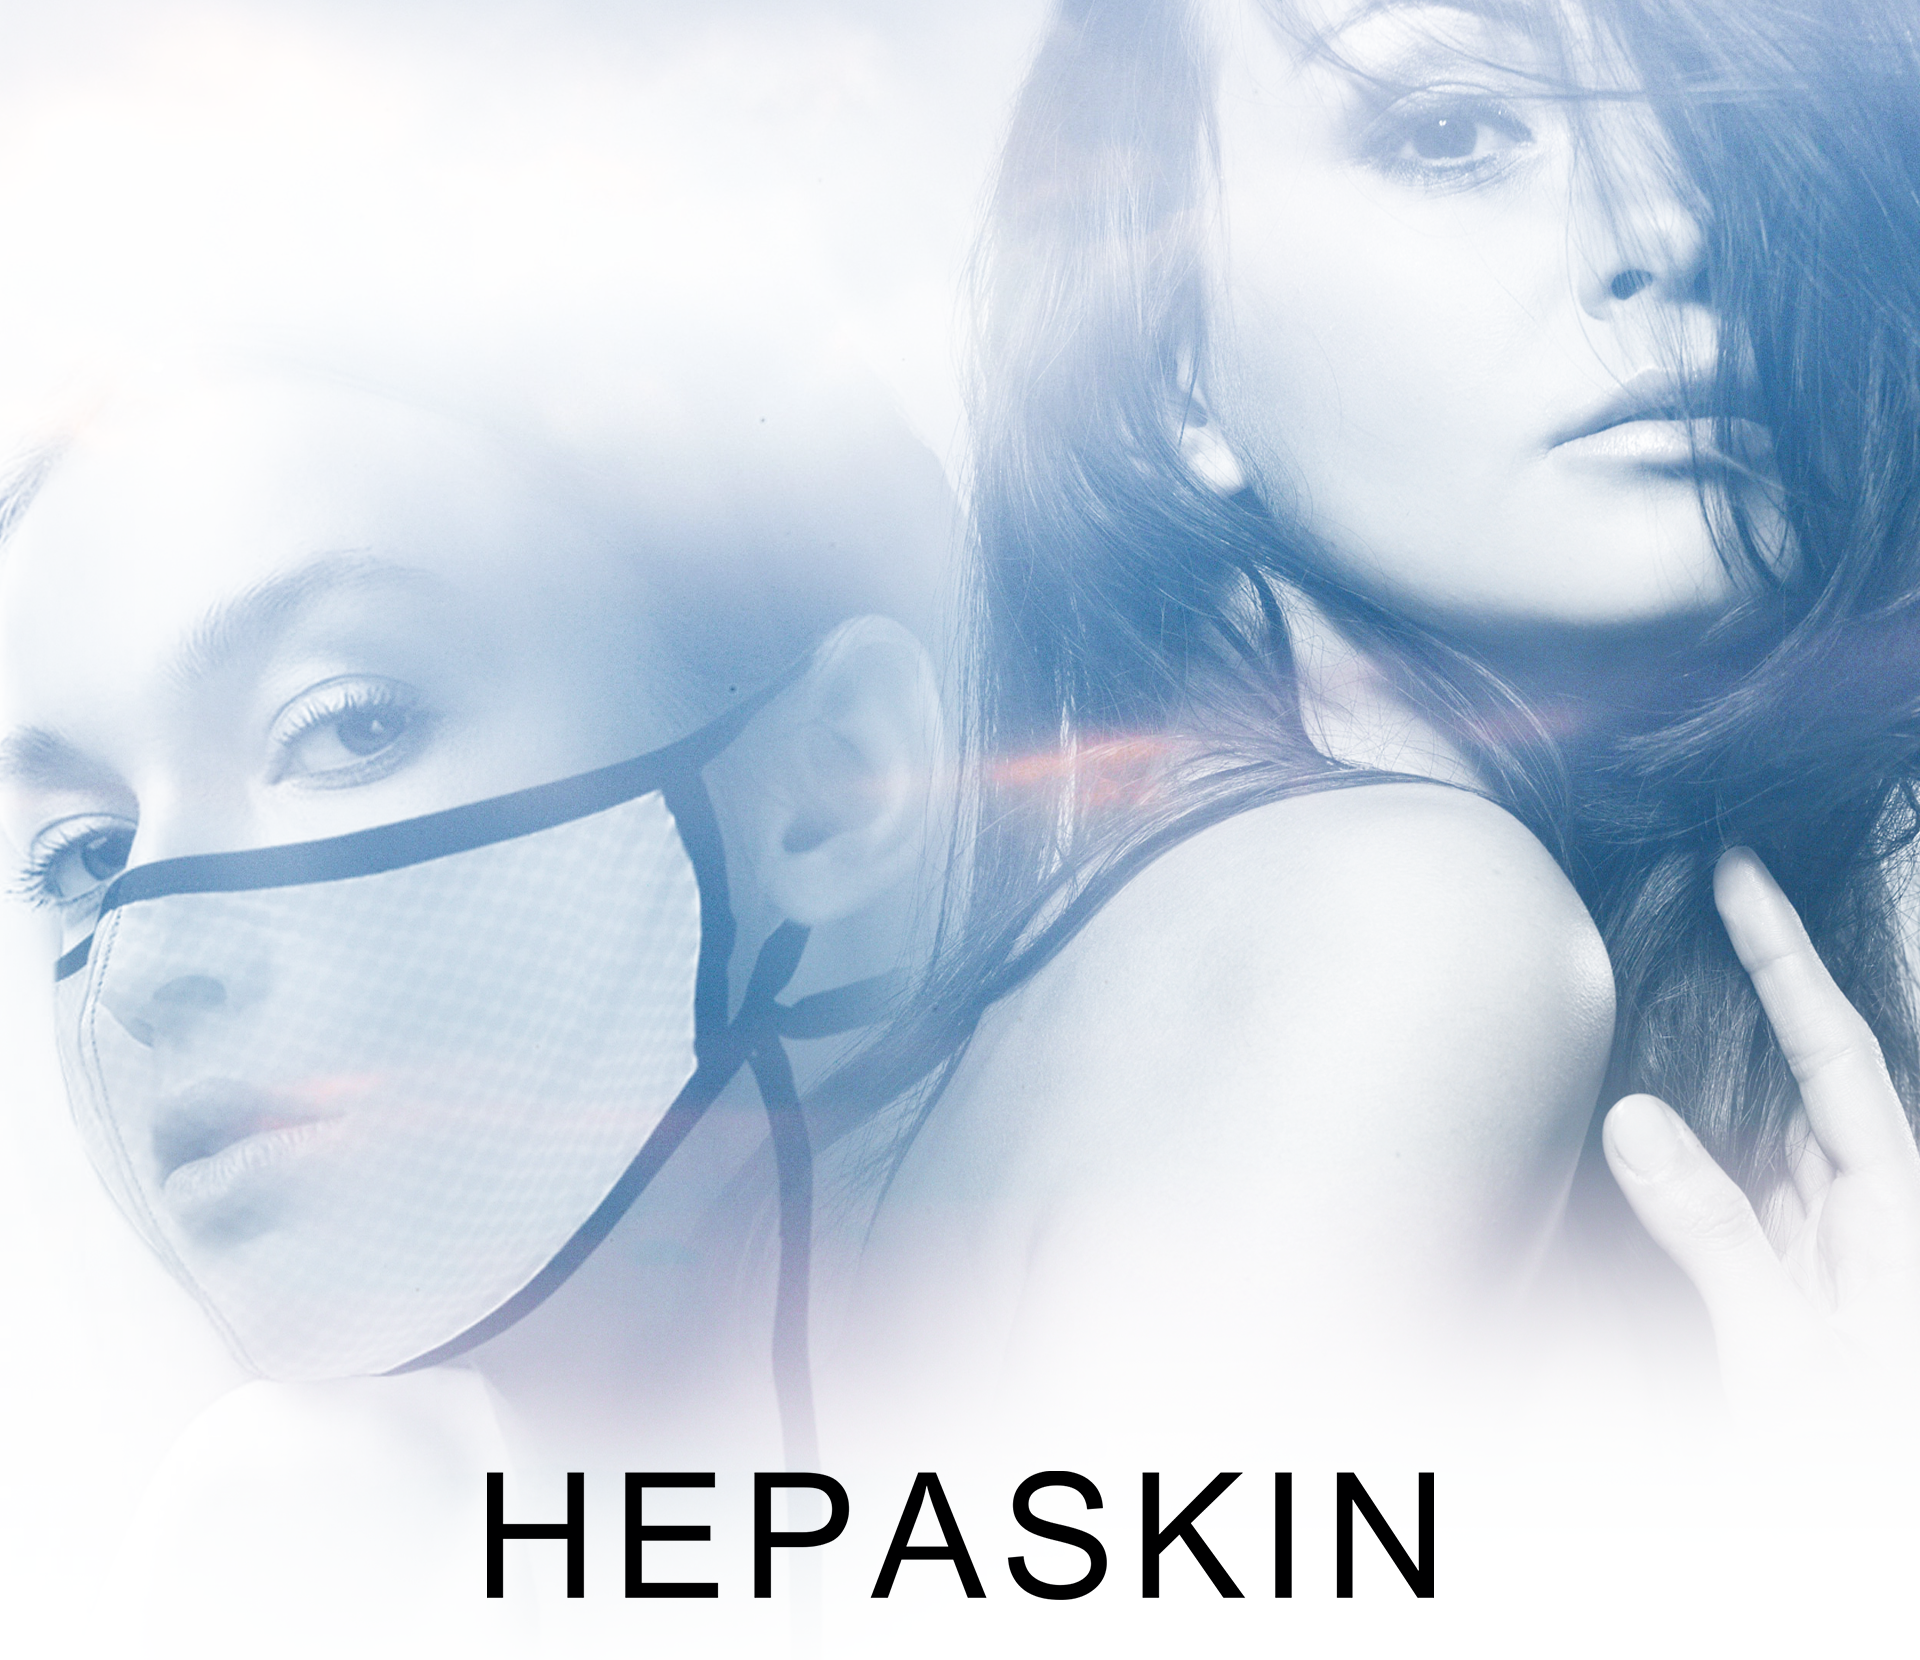 HEPASKIN / wApXL